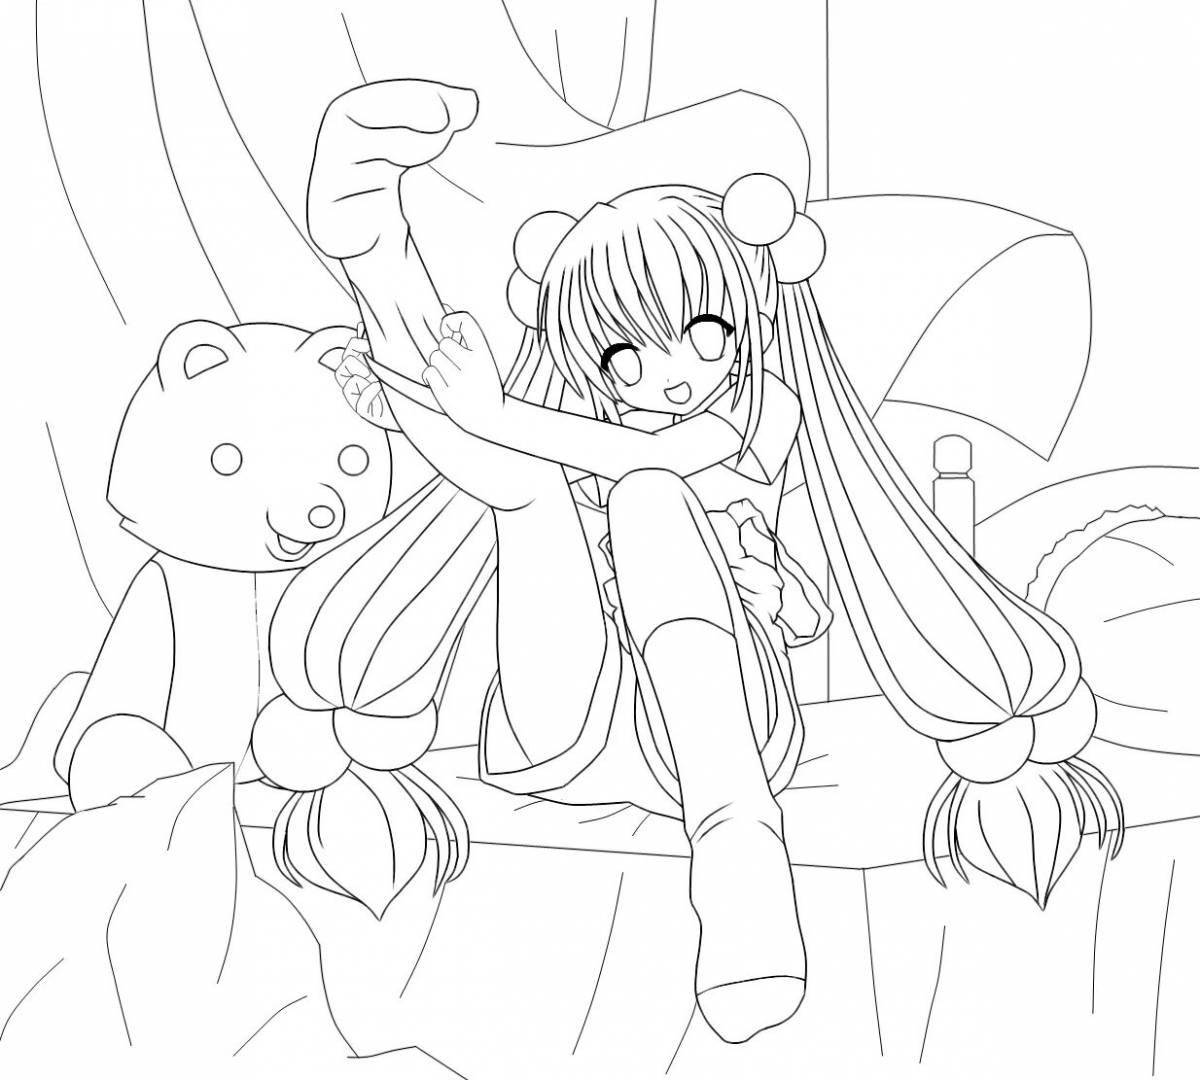 Coloring mystic bear anime